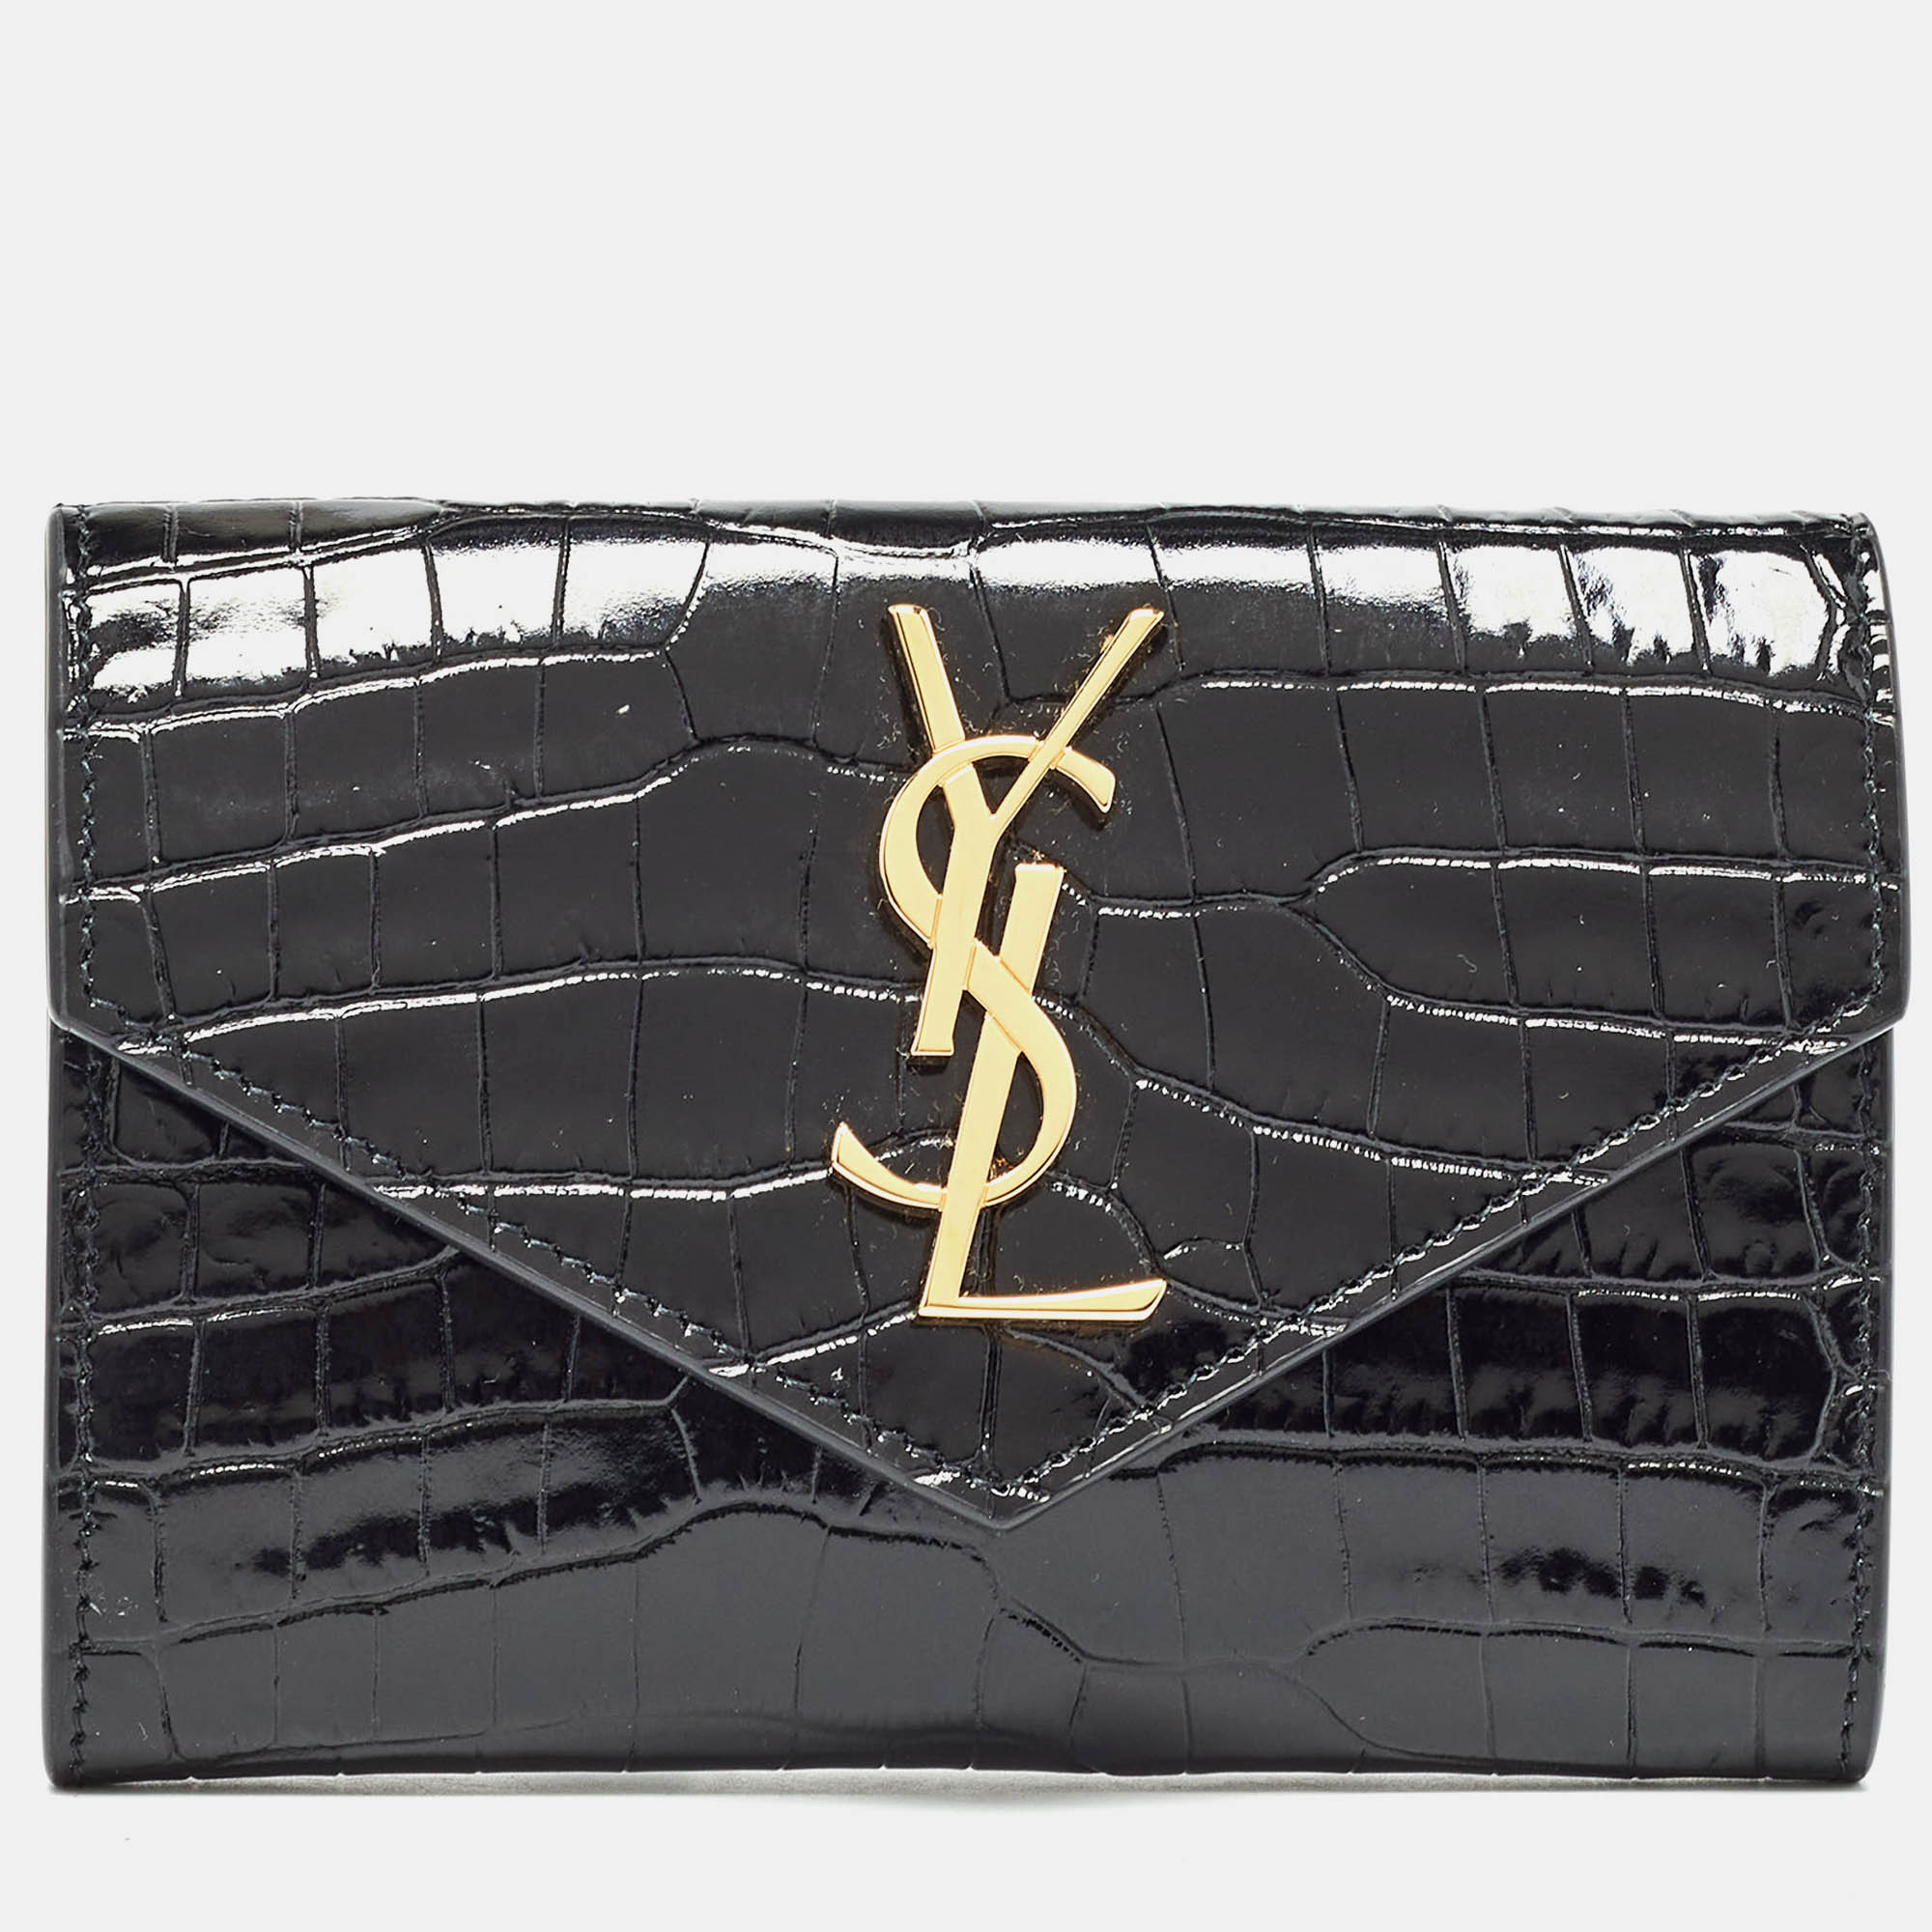 

Saint Laurent Black Croc Embossed Leather Monogram Compact Wallet